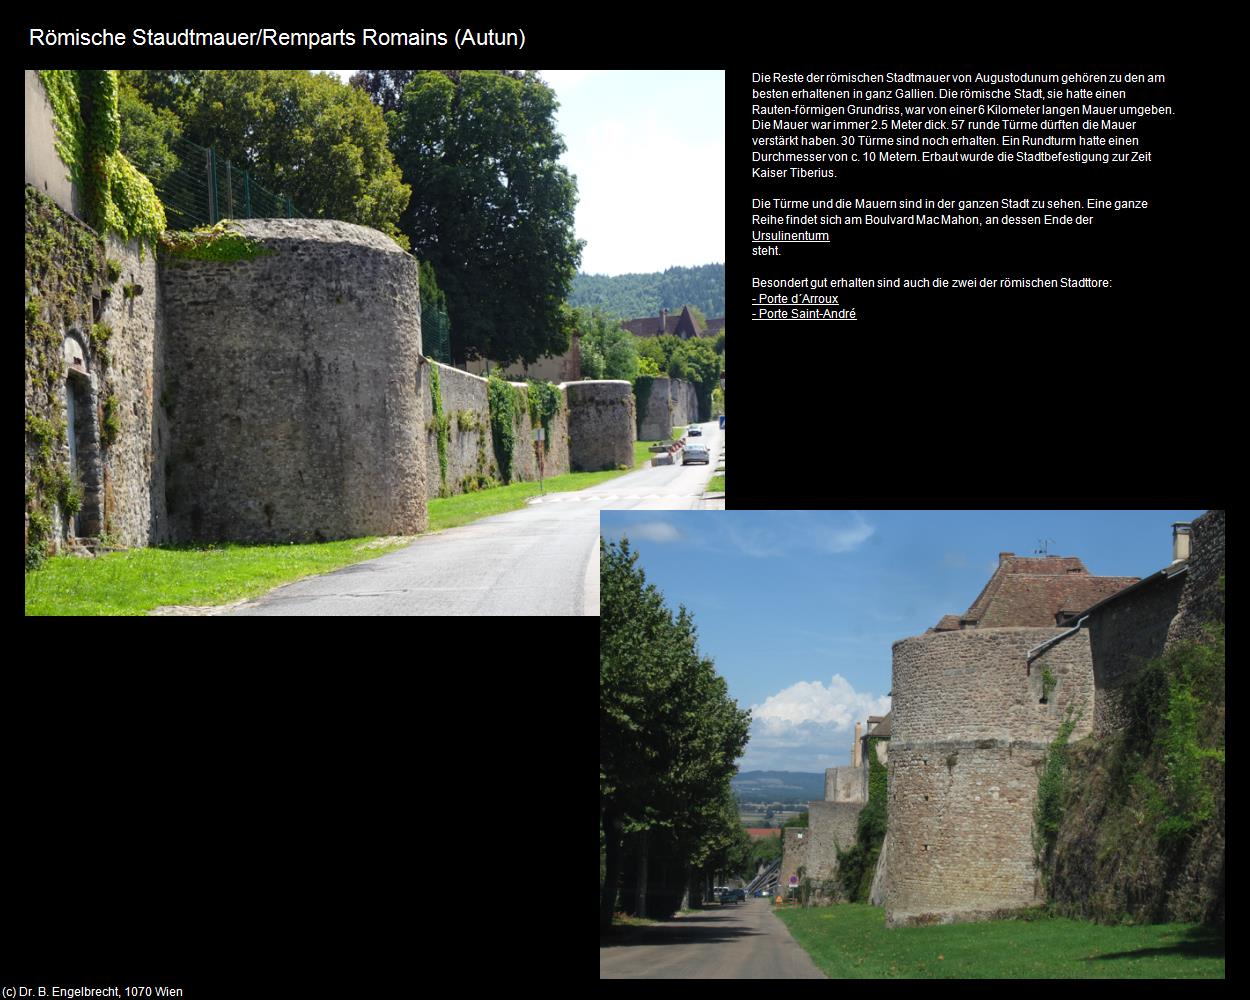 Remparts Romains (Autun (FR-BFC)) in Kulturatlas-FRANKREICH(c)B.Engelbrecht